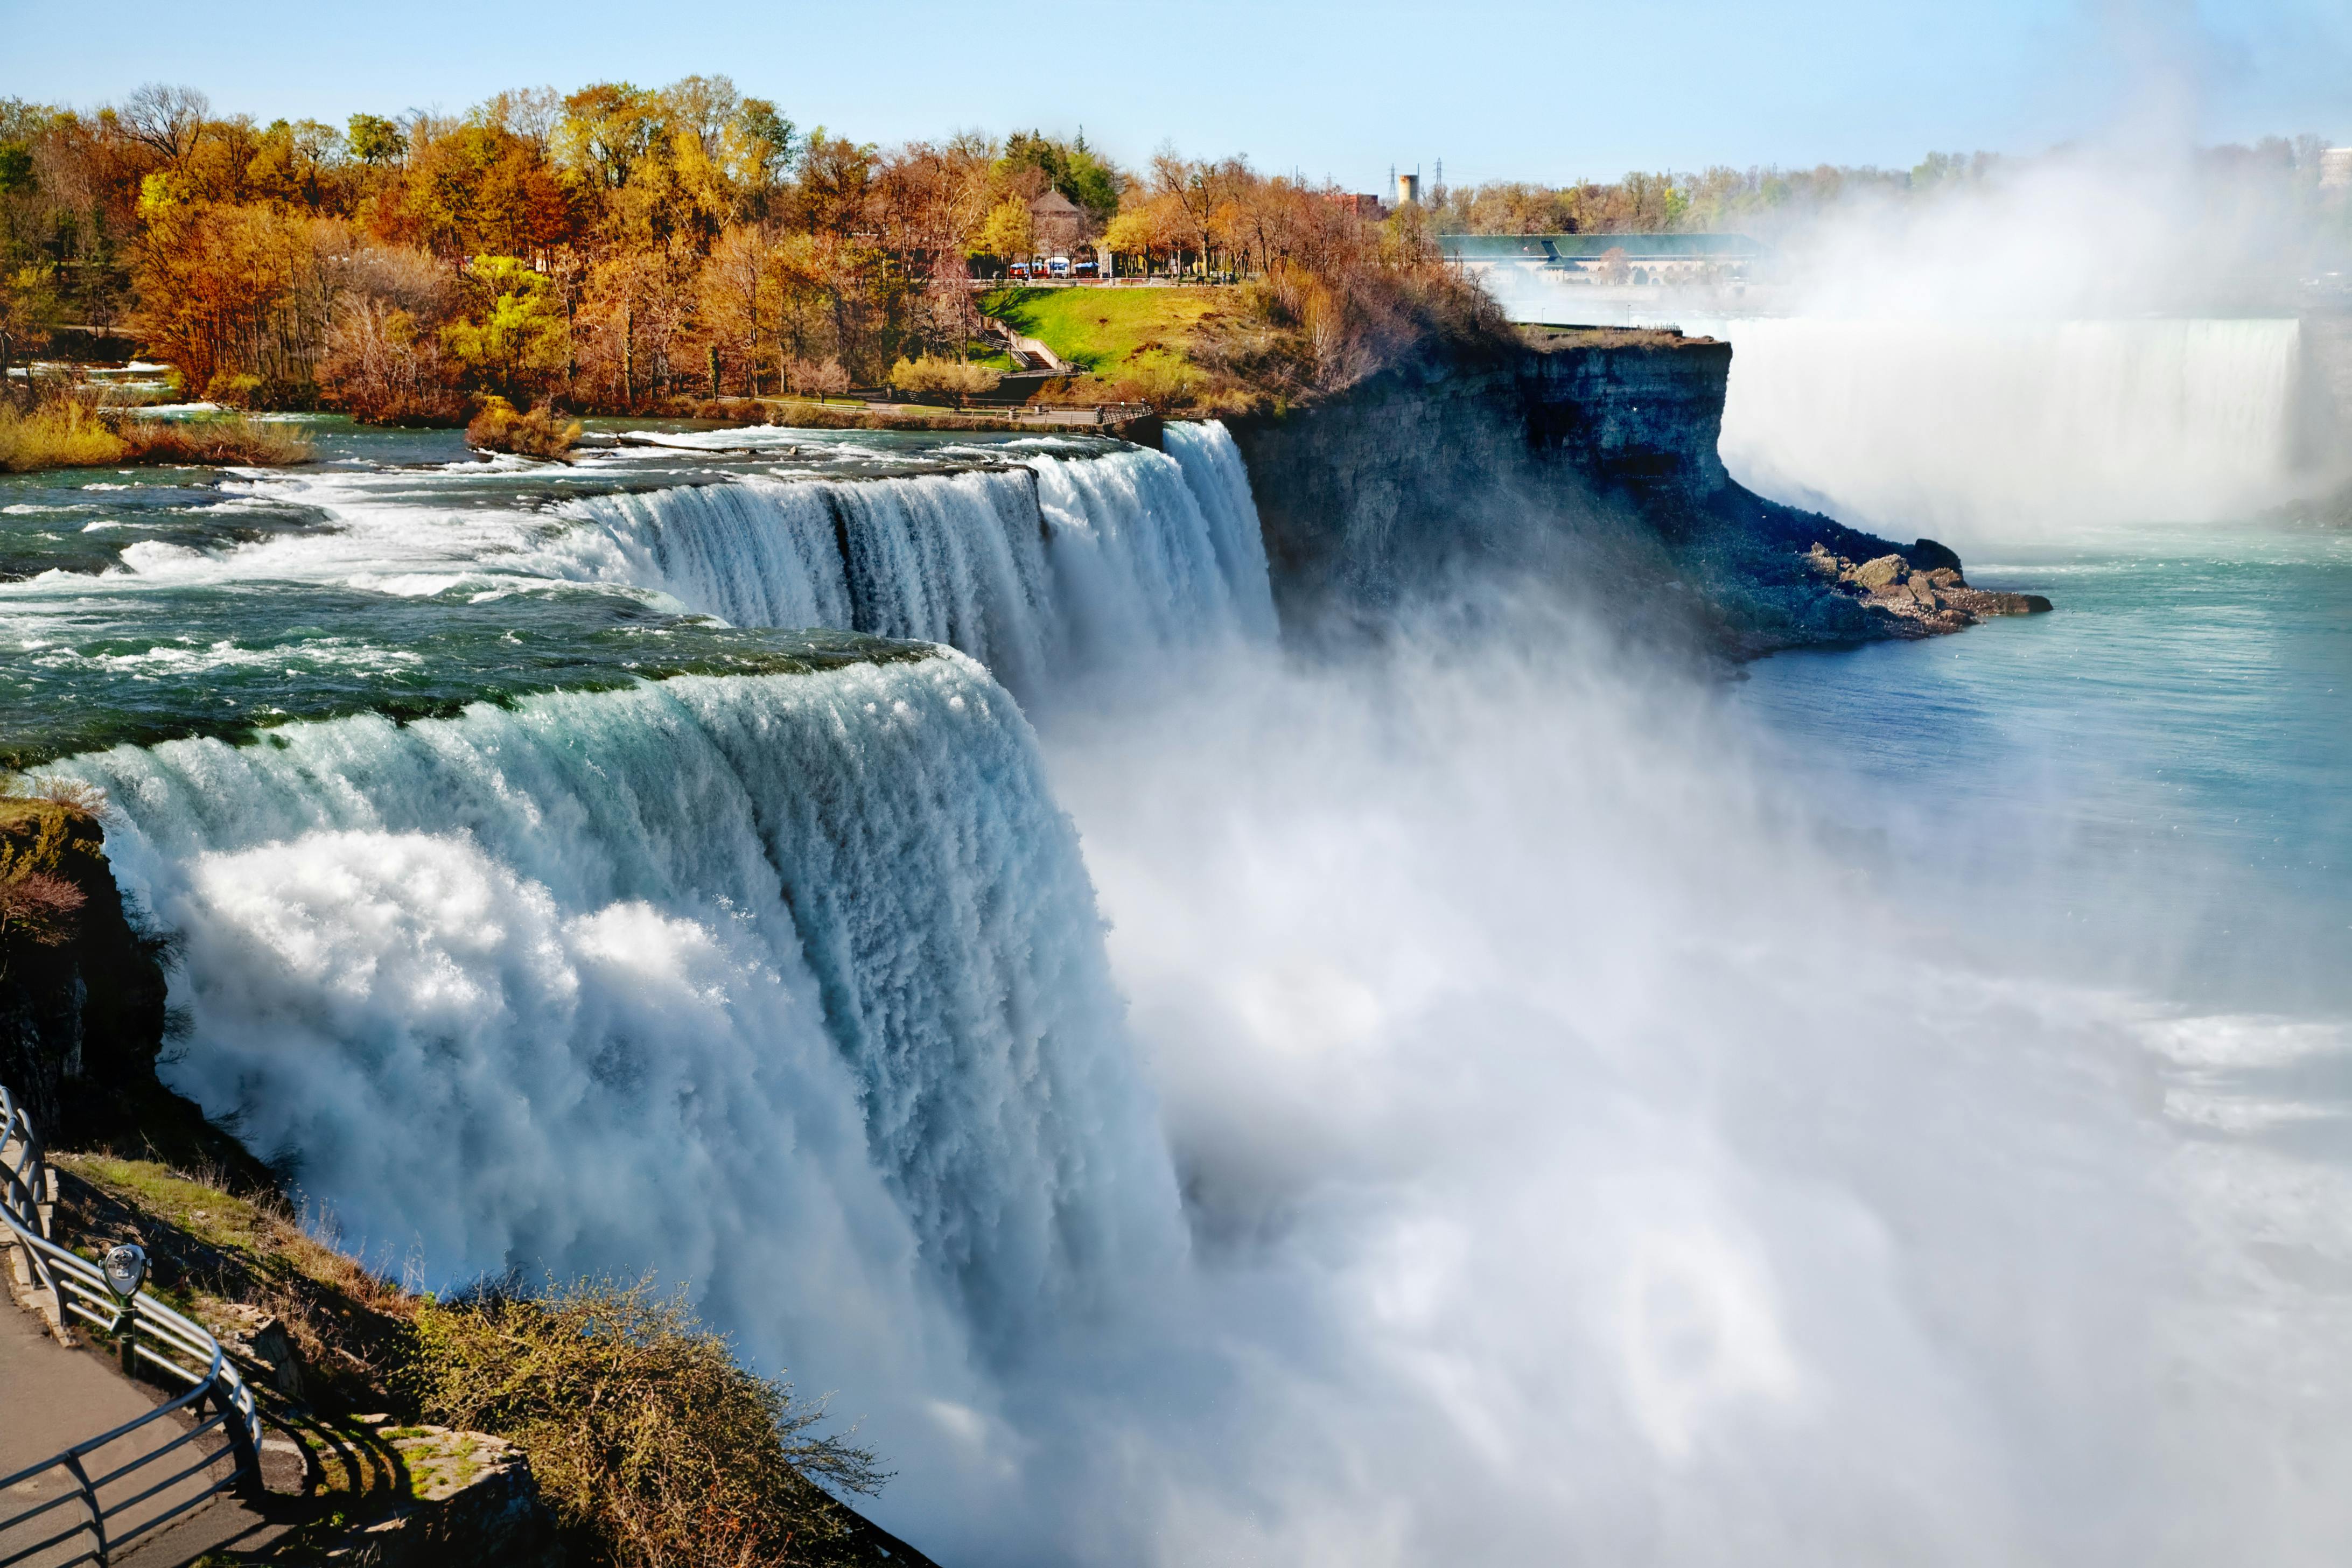 Откуда водопад. Северная Америка Ниагарский водопад. Ниагарский водопад Канада. США Ниагара водопад. Ниагарский водопад - Niagara Falls.